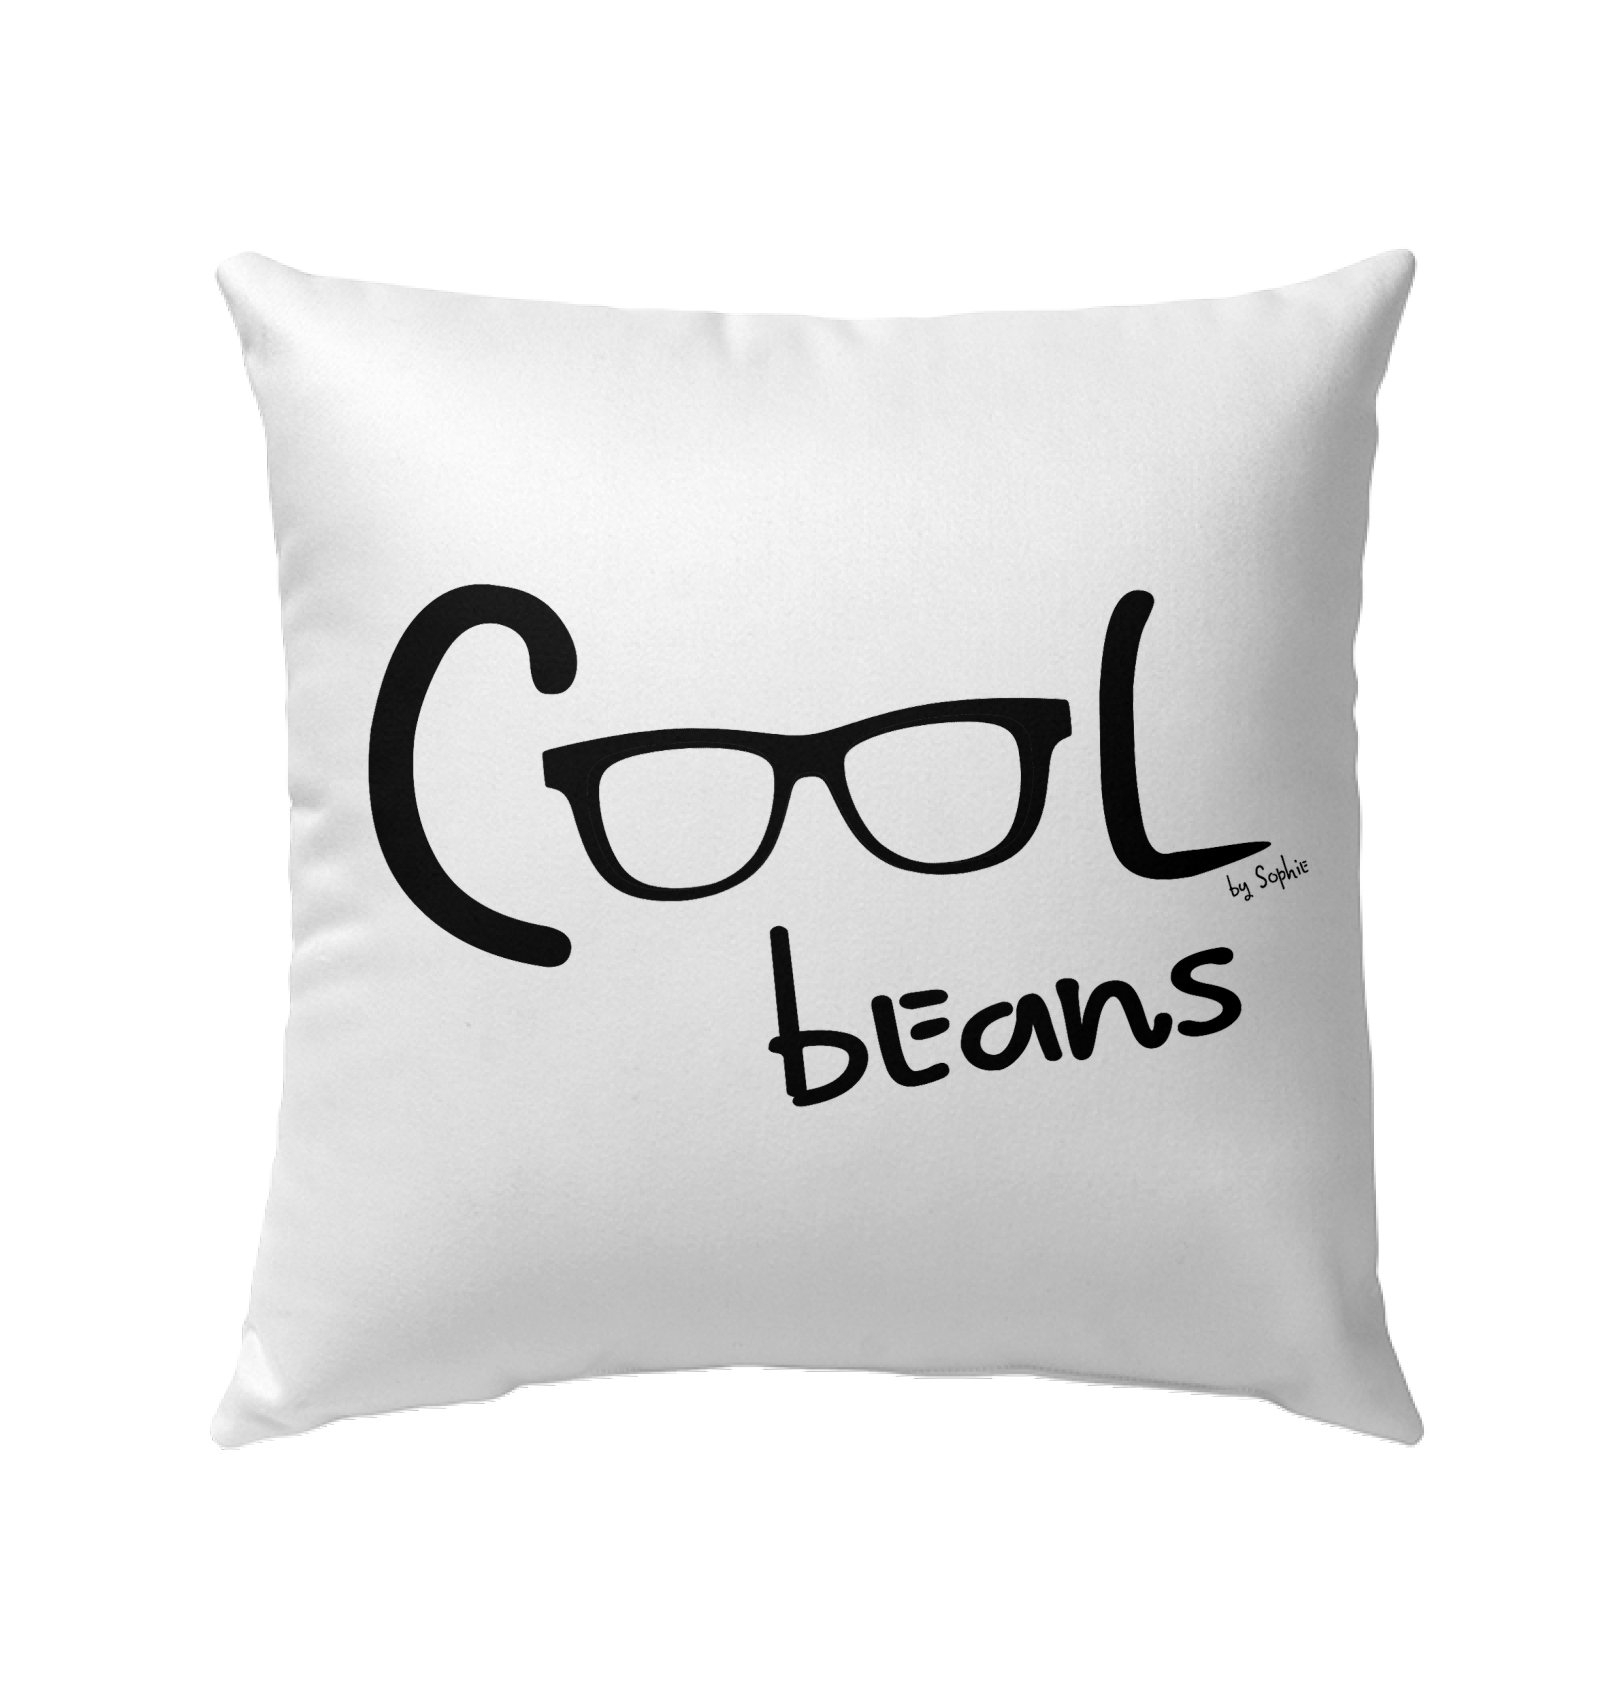 Cool Beans - Black - Outdoor Pillow